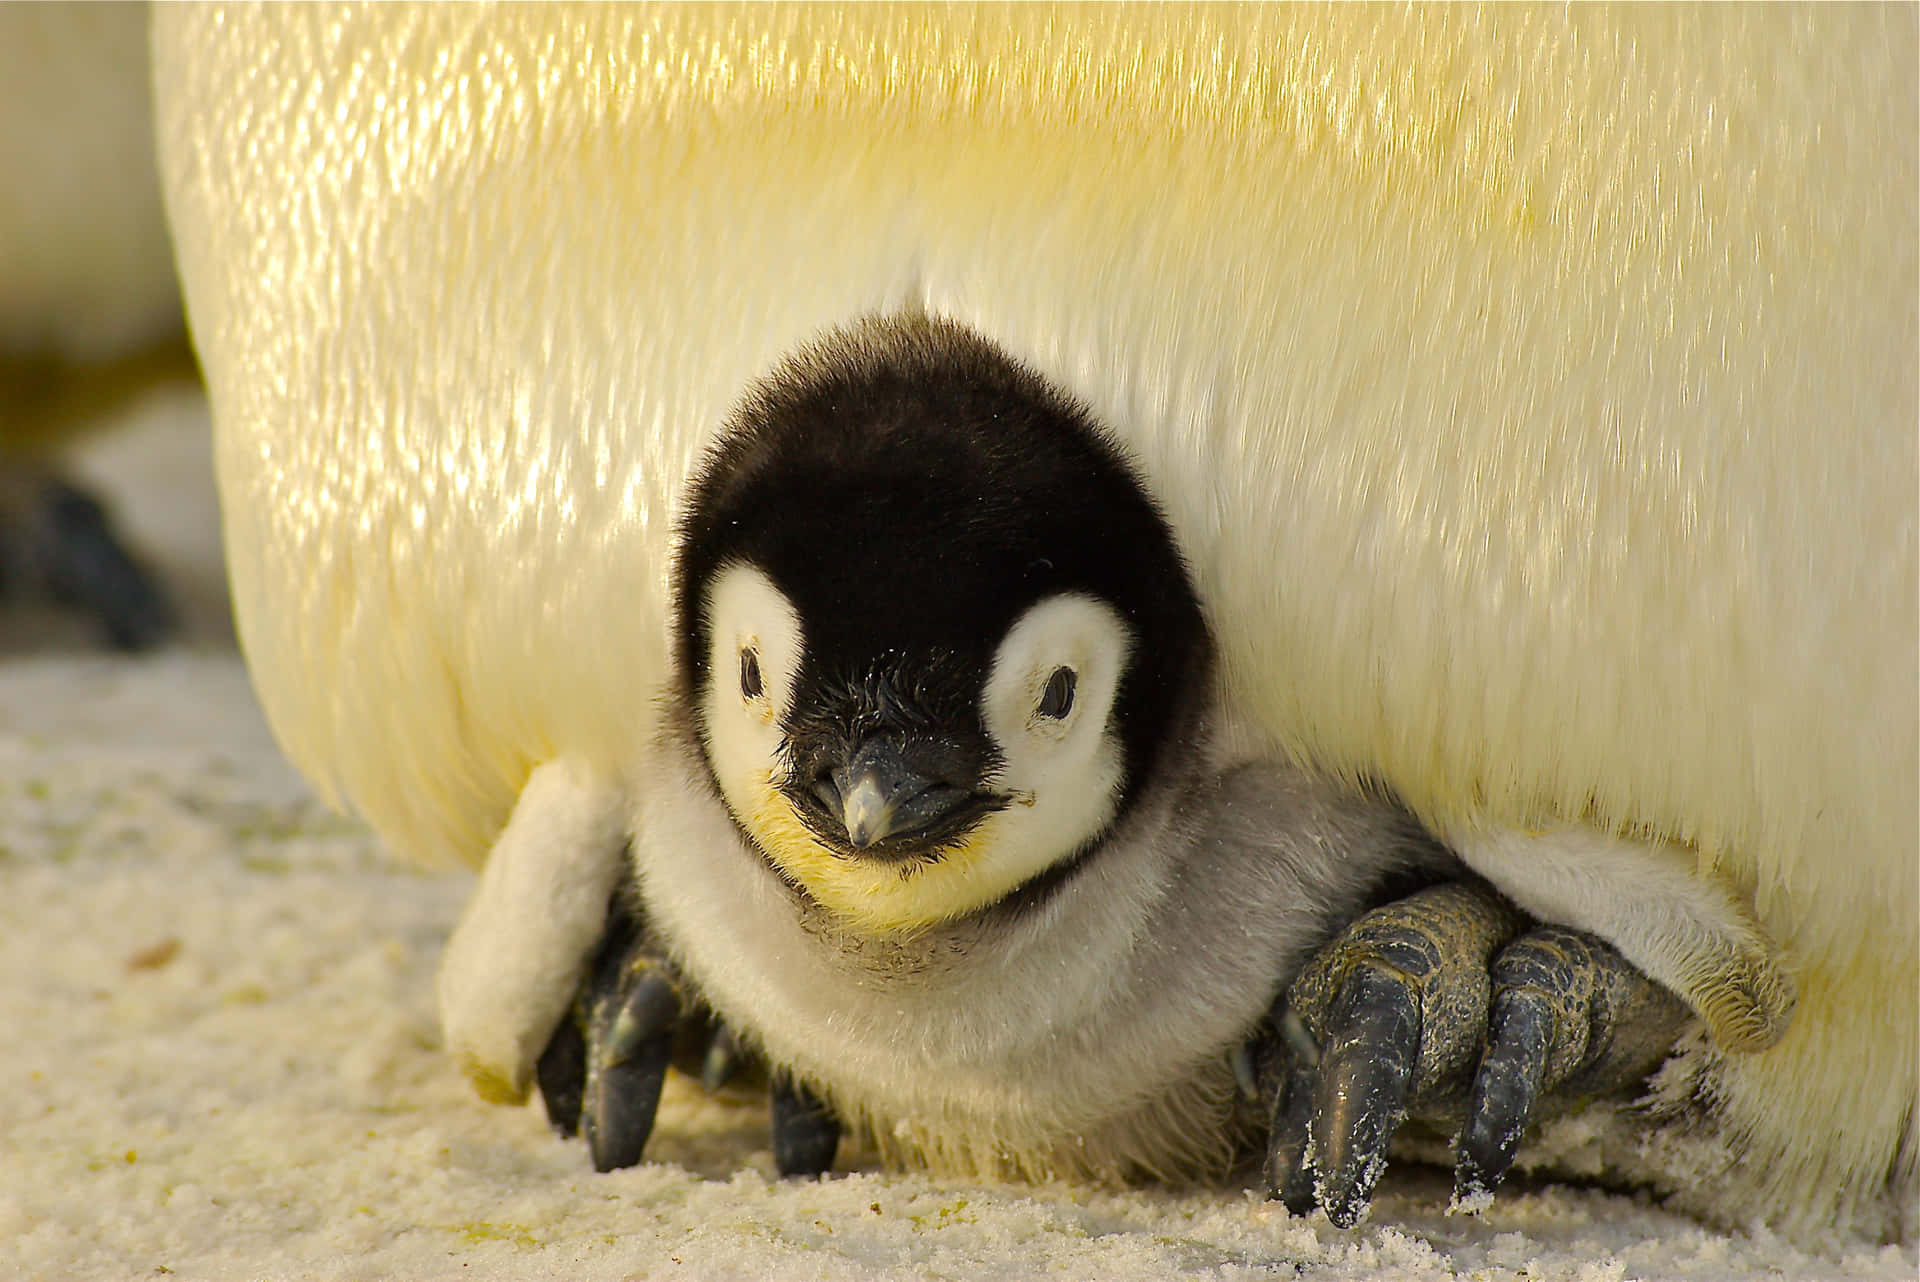 "Lovable Baby Penguin Spreads Joy"